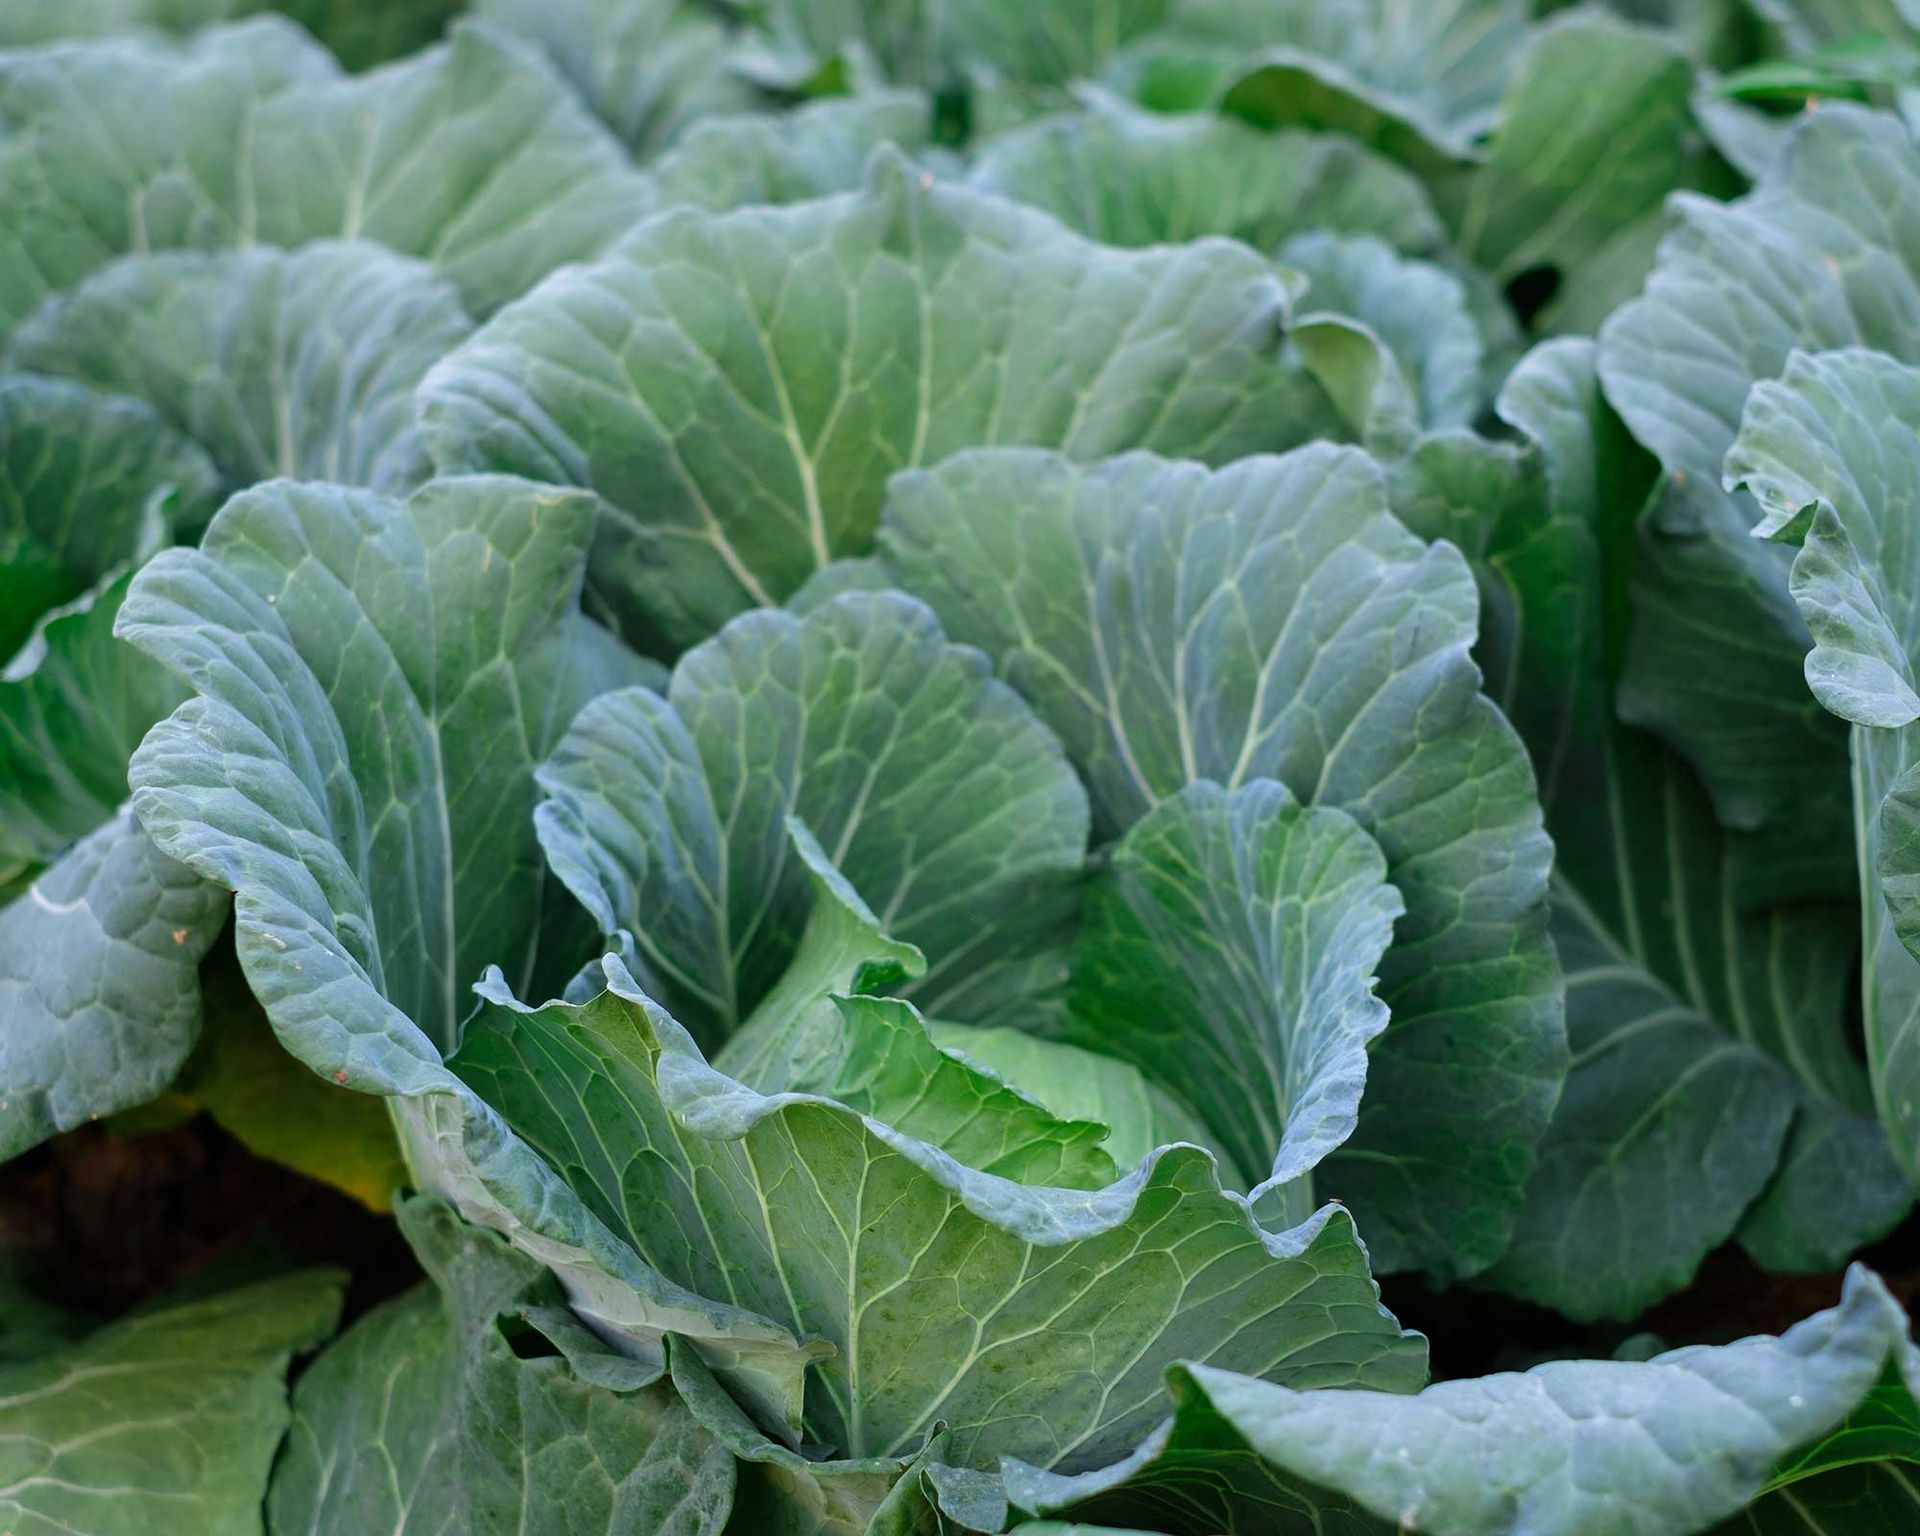 Easiest vegetables to grow in pots or garden beds: 10 tasty crops to ...